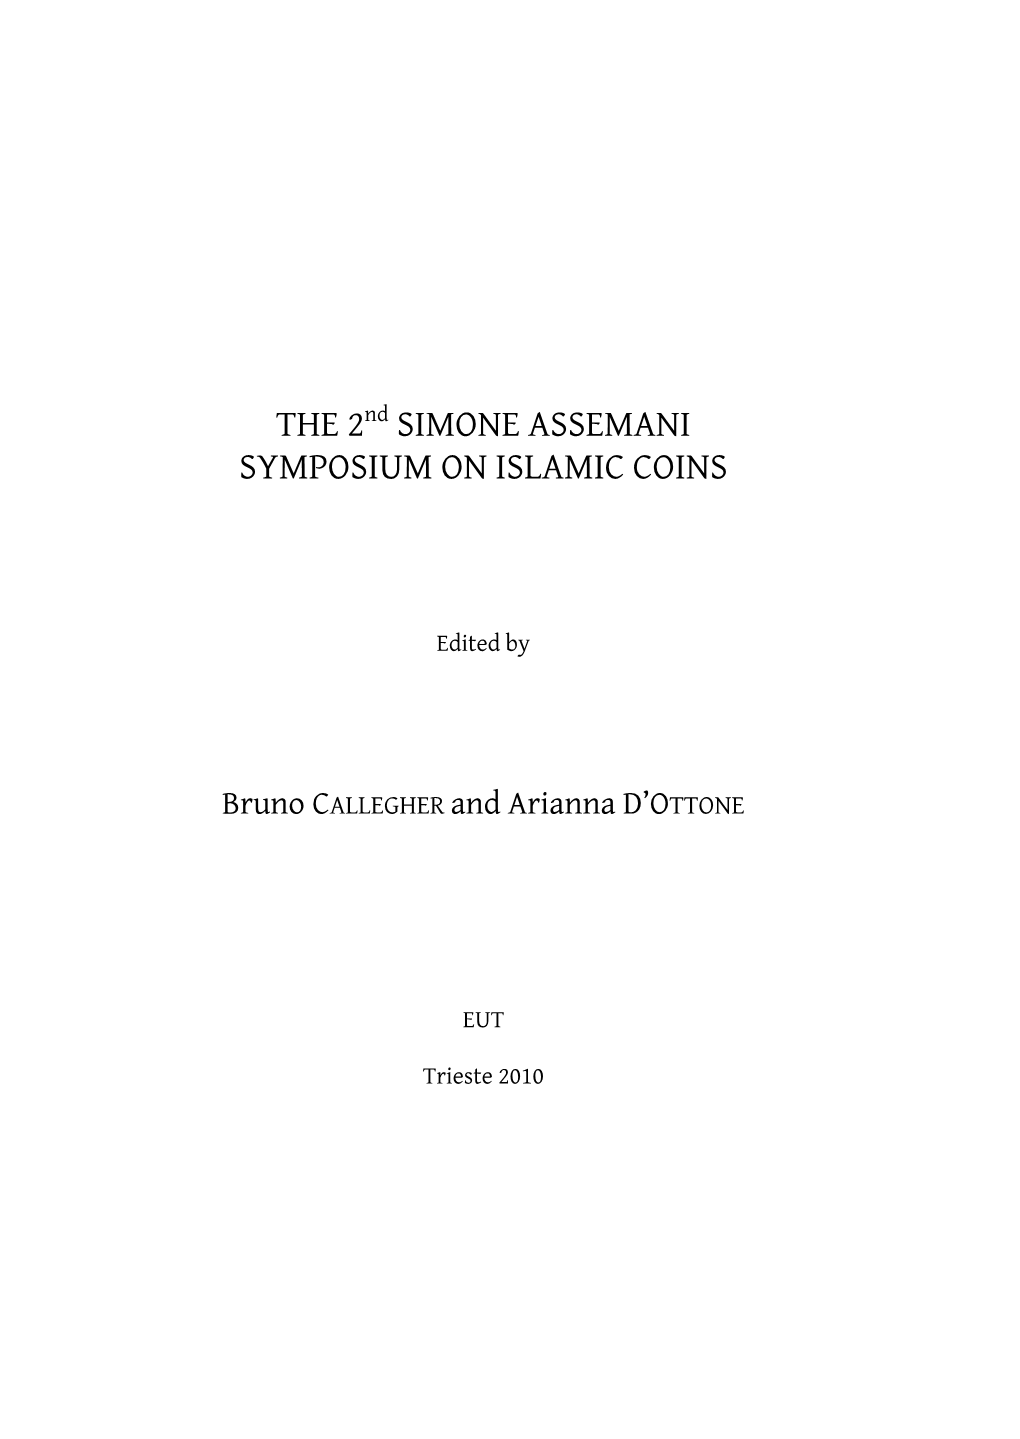 THE 2Nd SIMONE ASSEMANI SYMPOSIUM on ISLAMIC COINS